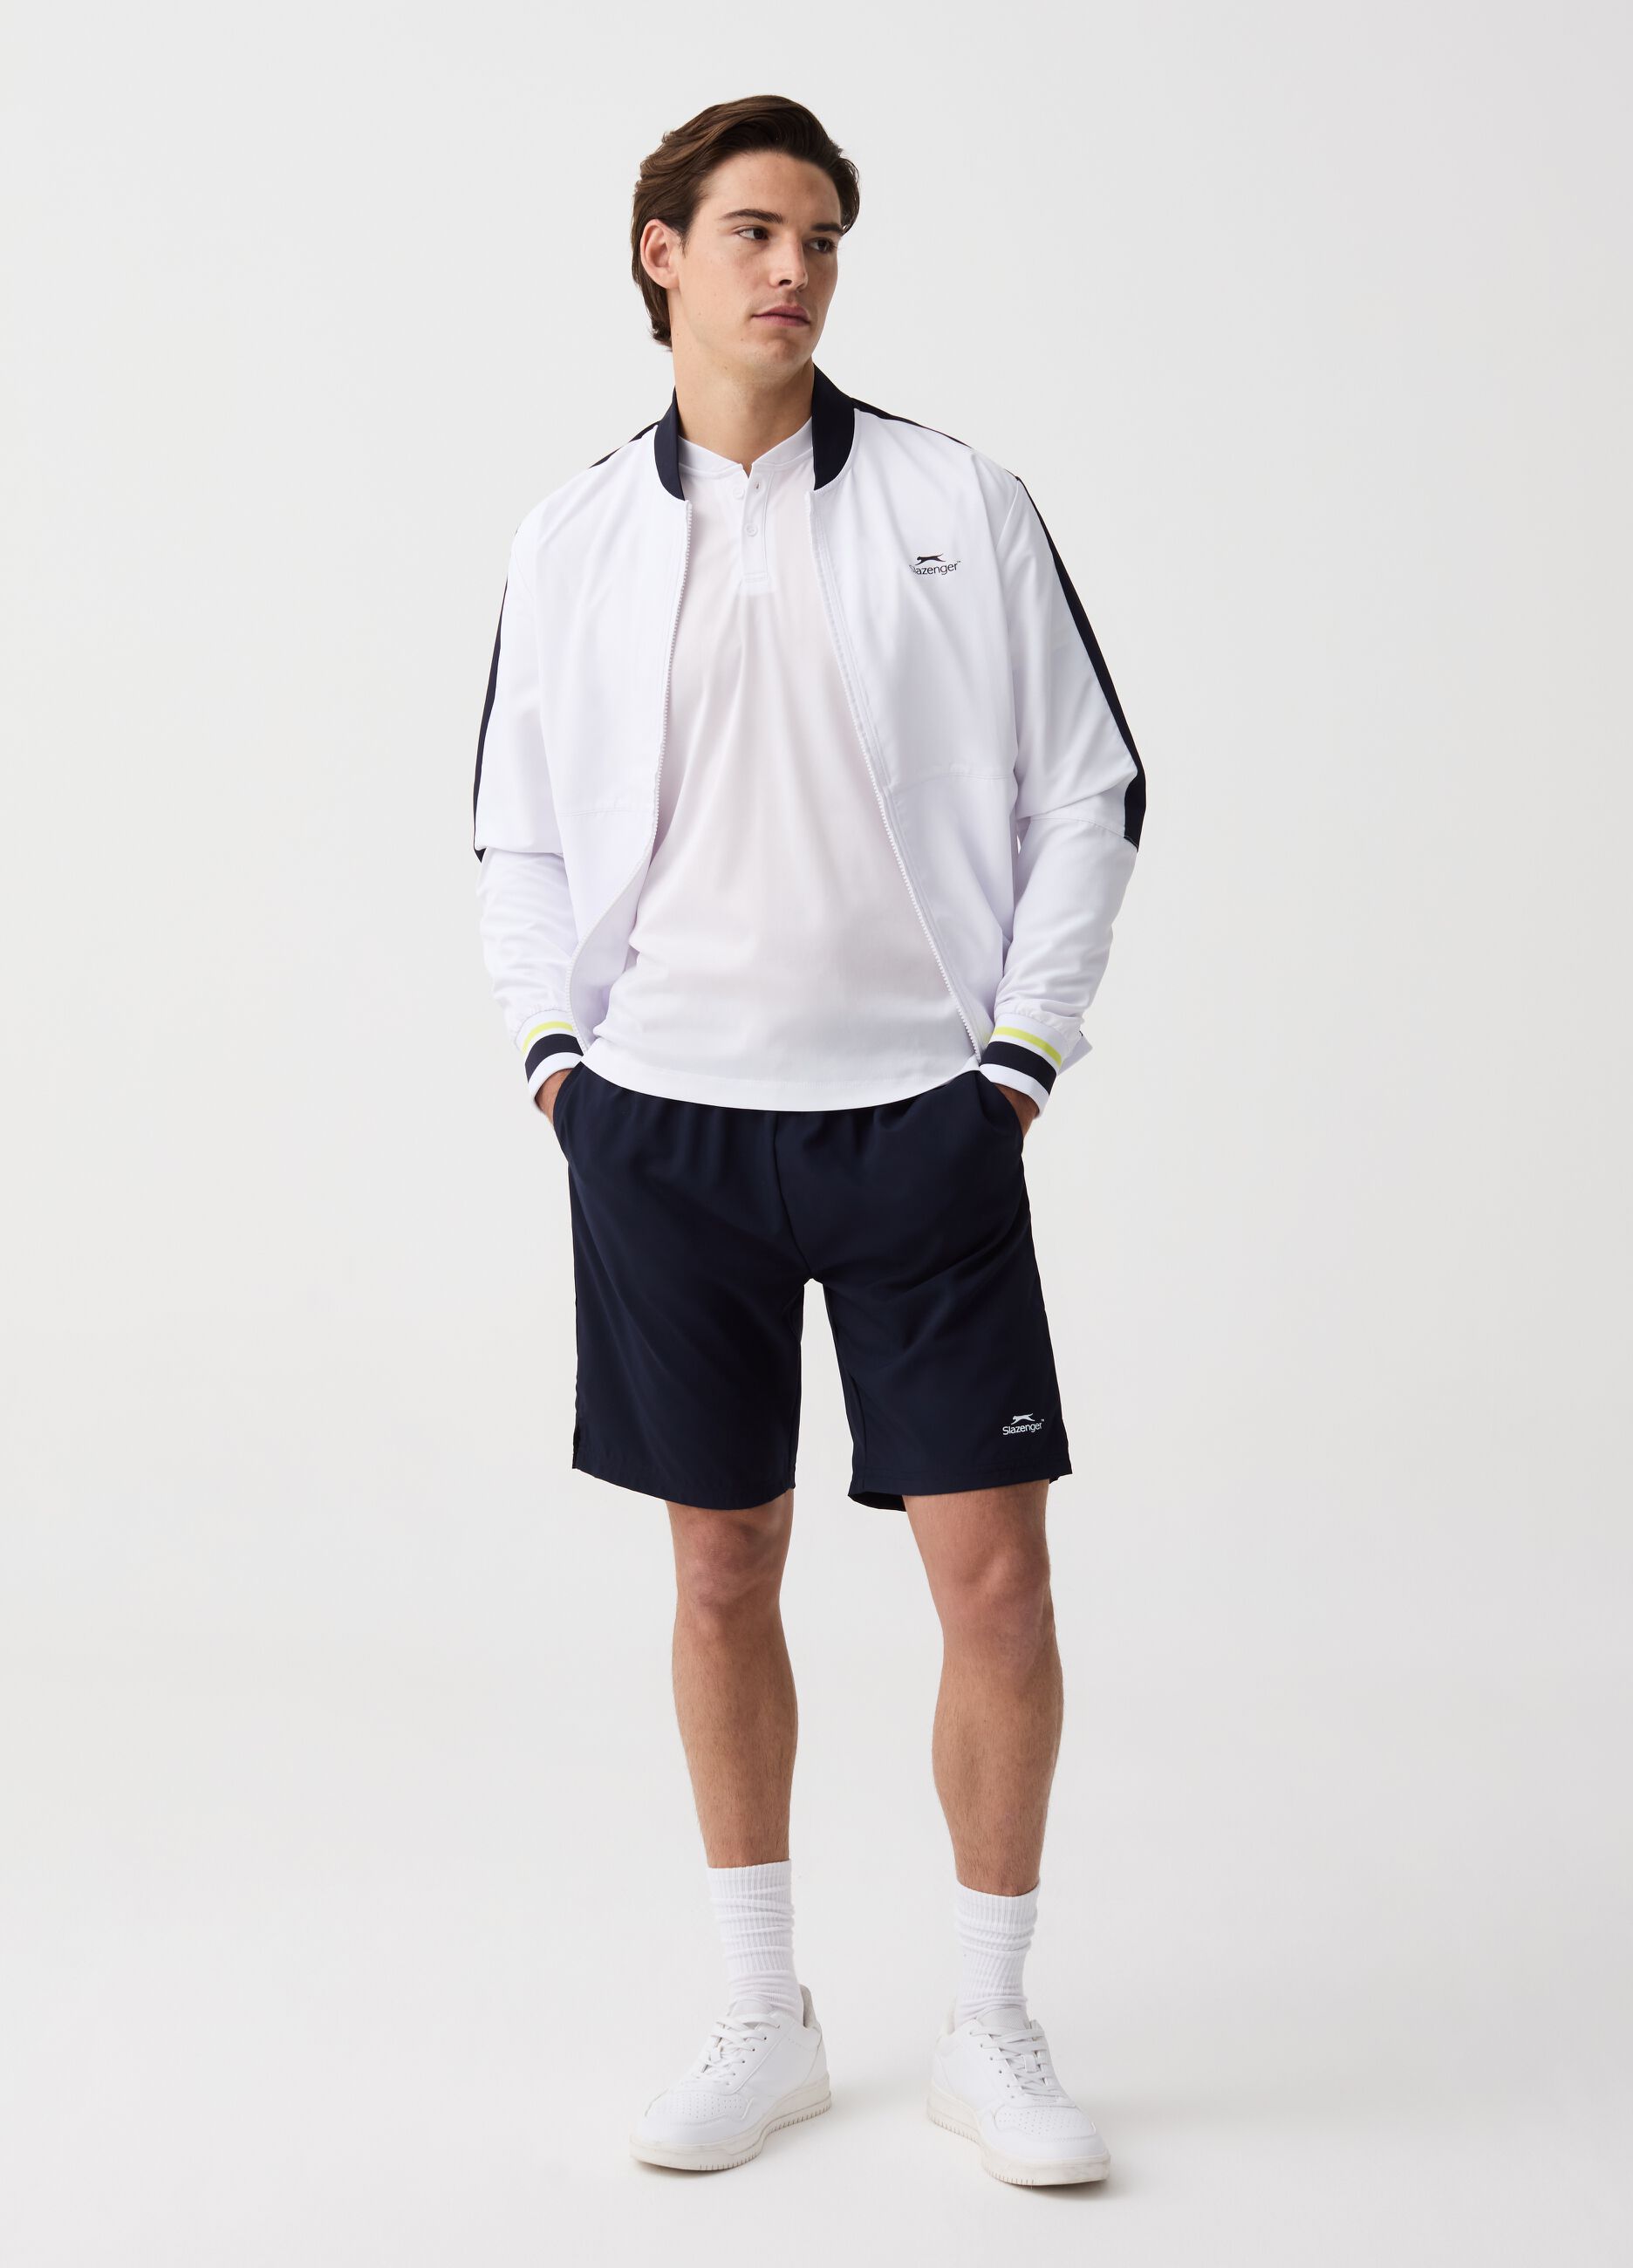 Quick-dry Bermuda tennis shorts with Slazenger print